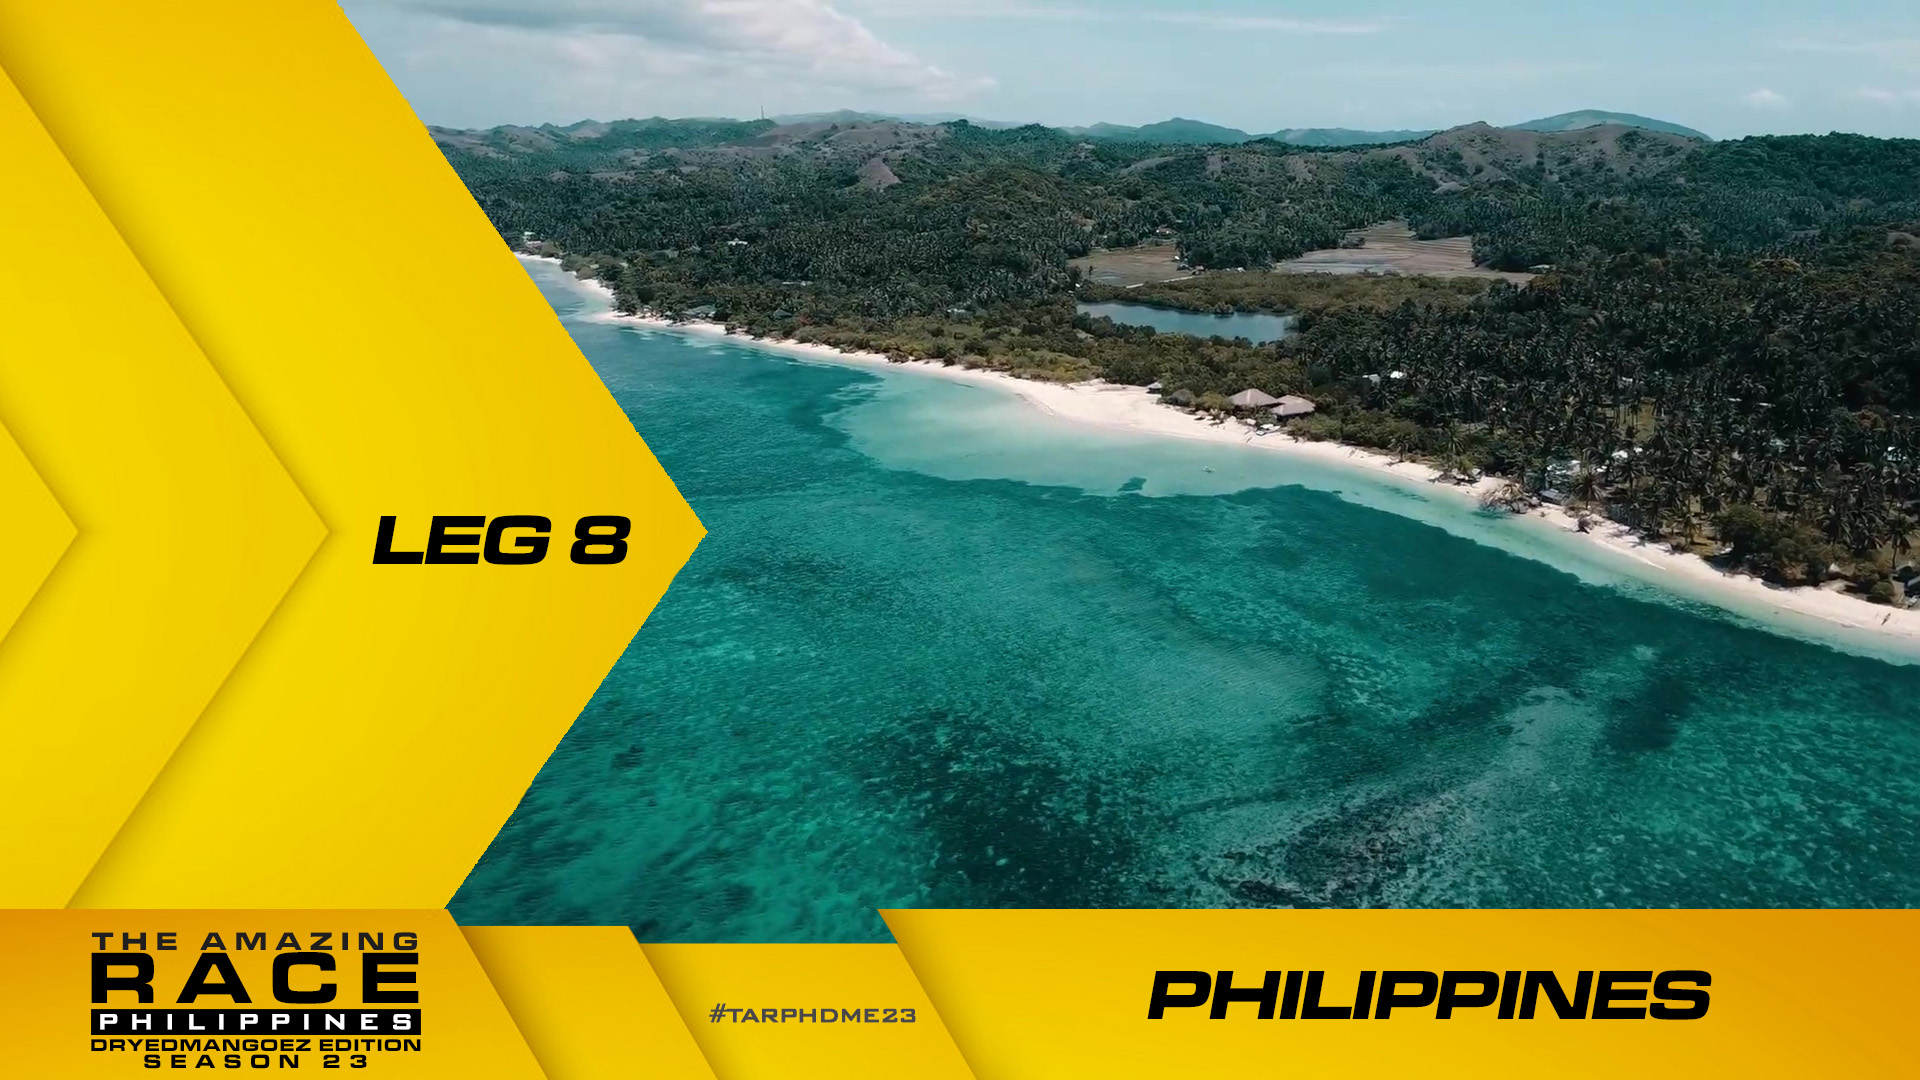 The Amazing Race Philippines: DryedMangoez Edition 23, Leg 8 – Philippines